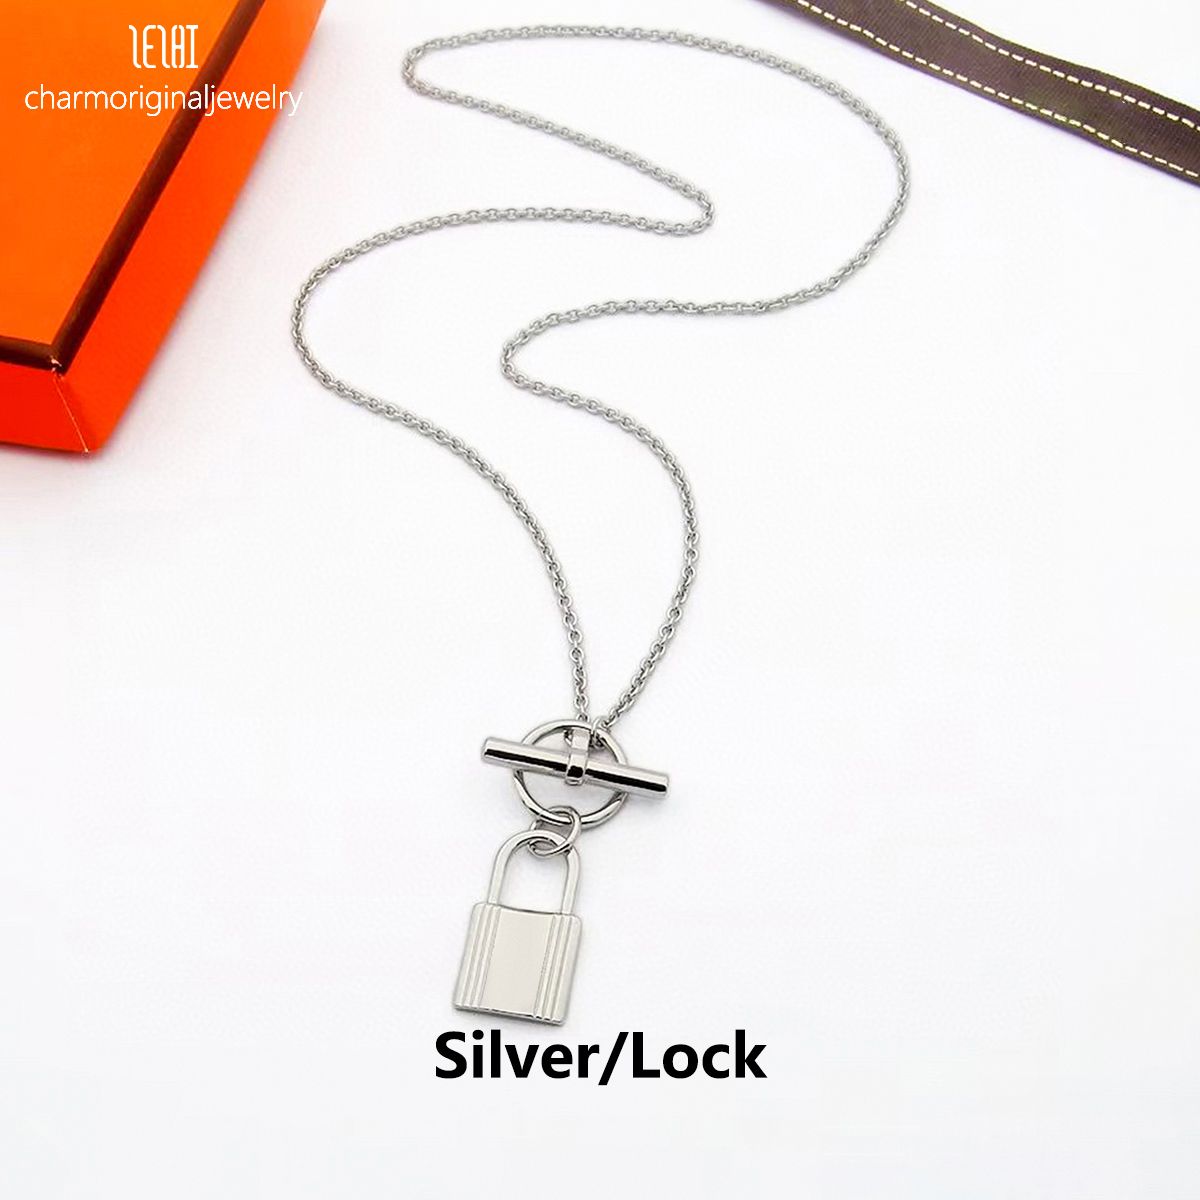 silver lock